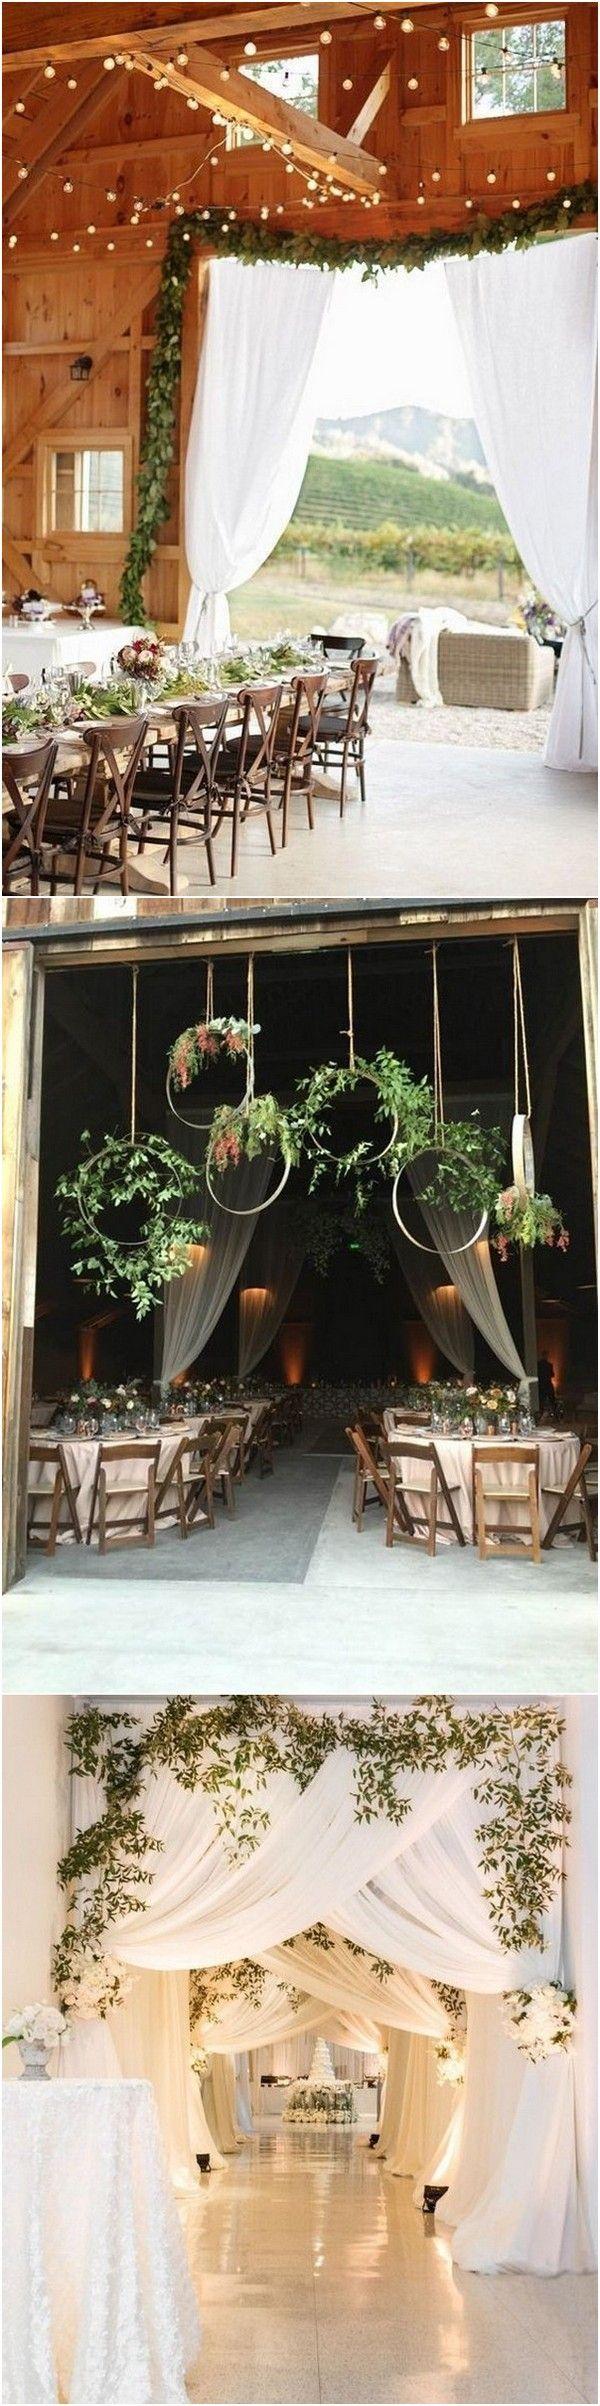 زفاف - Top 20 Wedding Entrance Decoration Ideas For Your Reception - Page 3 Of 3